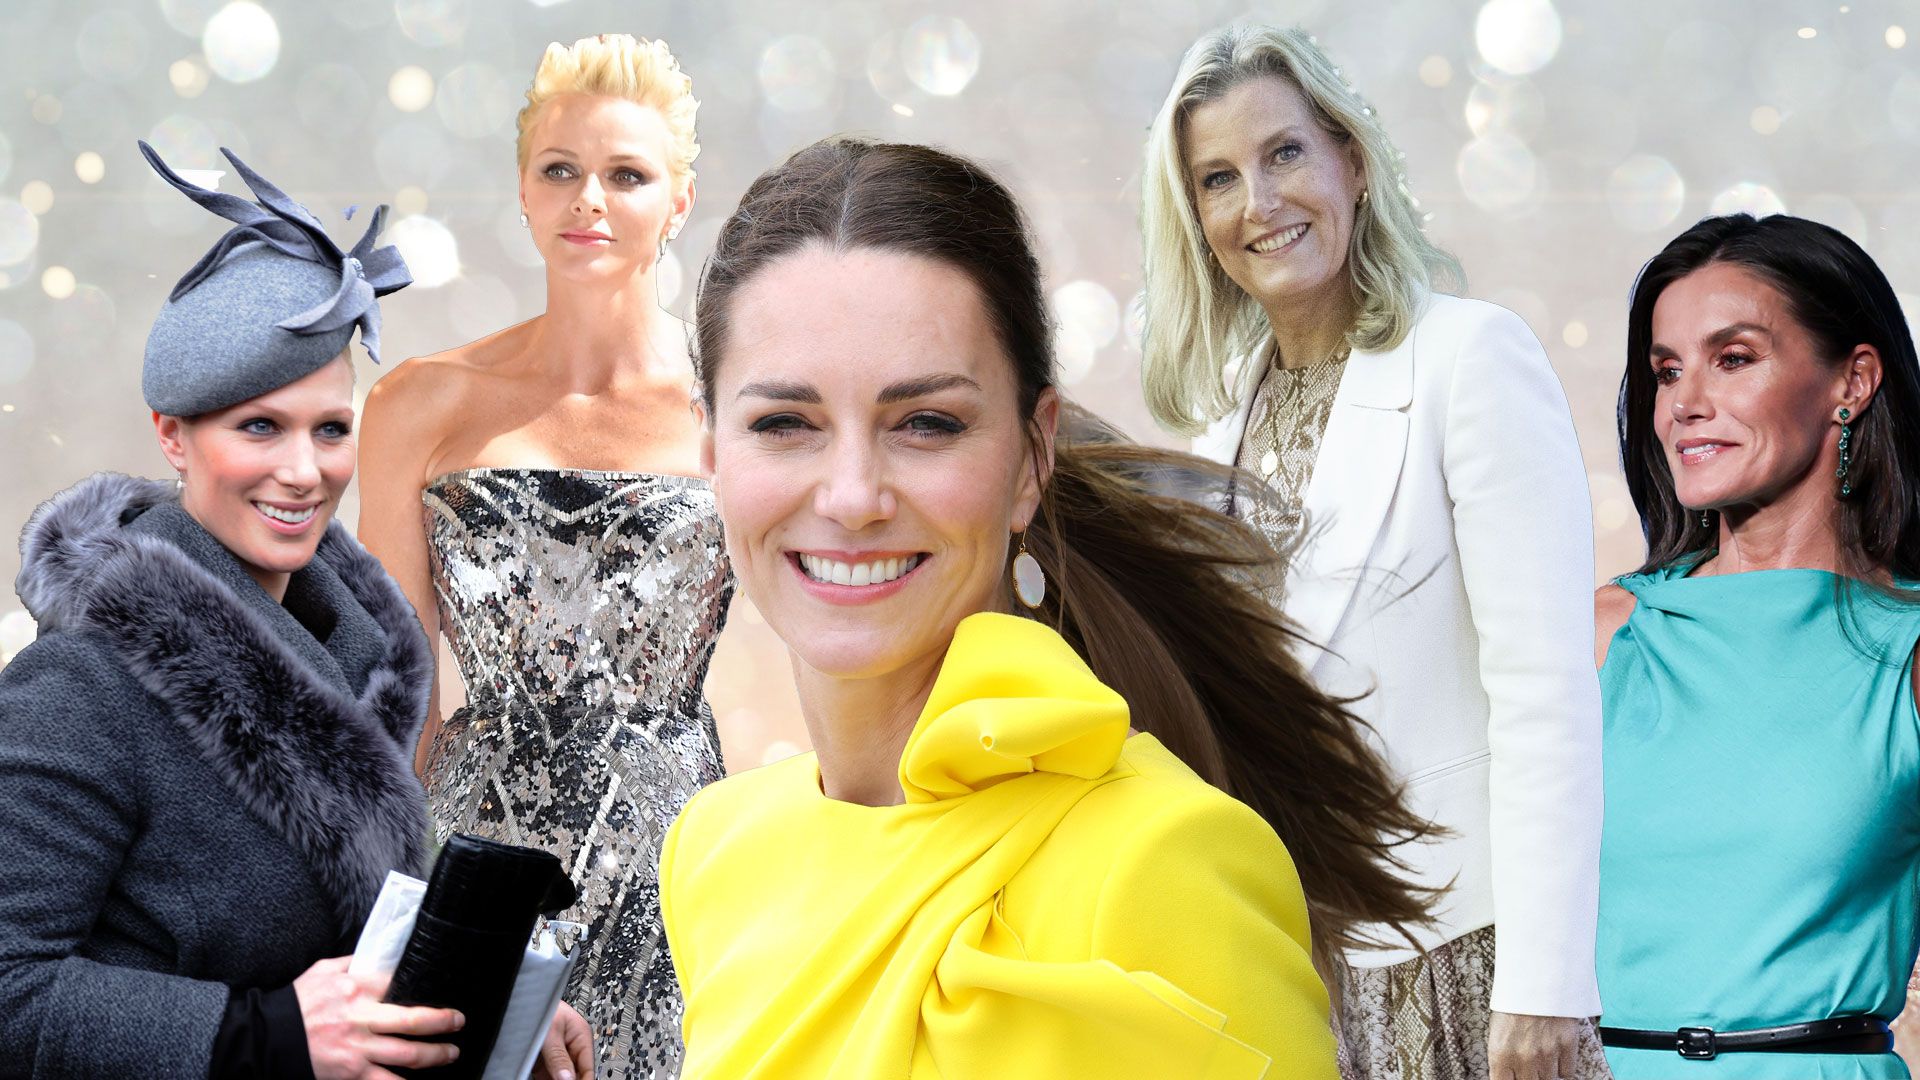 zara tindall, princess charlene, princess kate, duchess sophie, queen letizia against sparkly backdrop